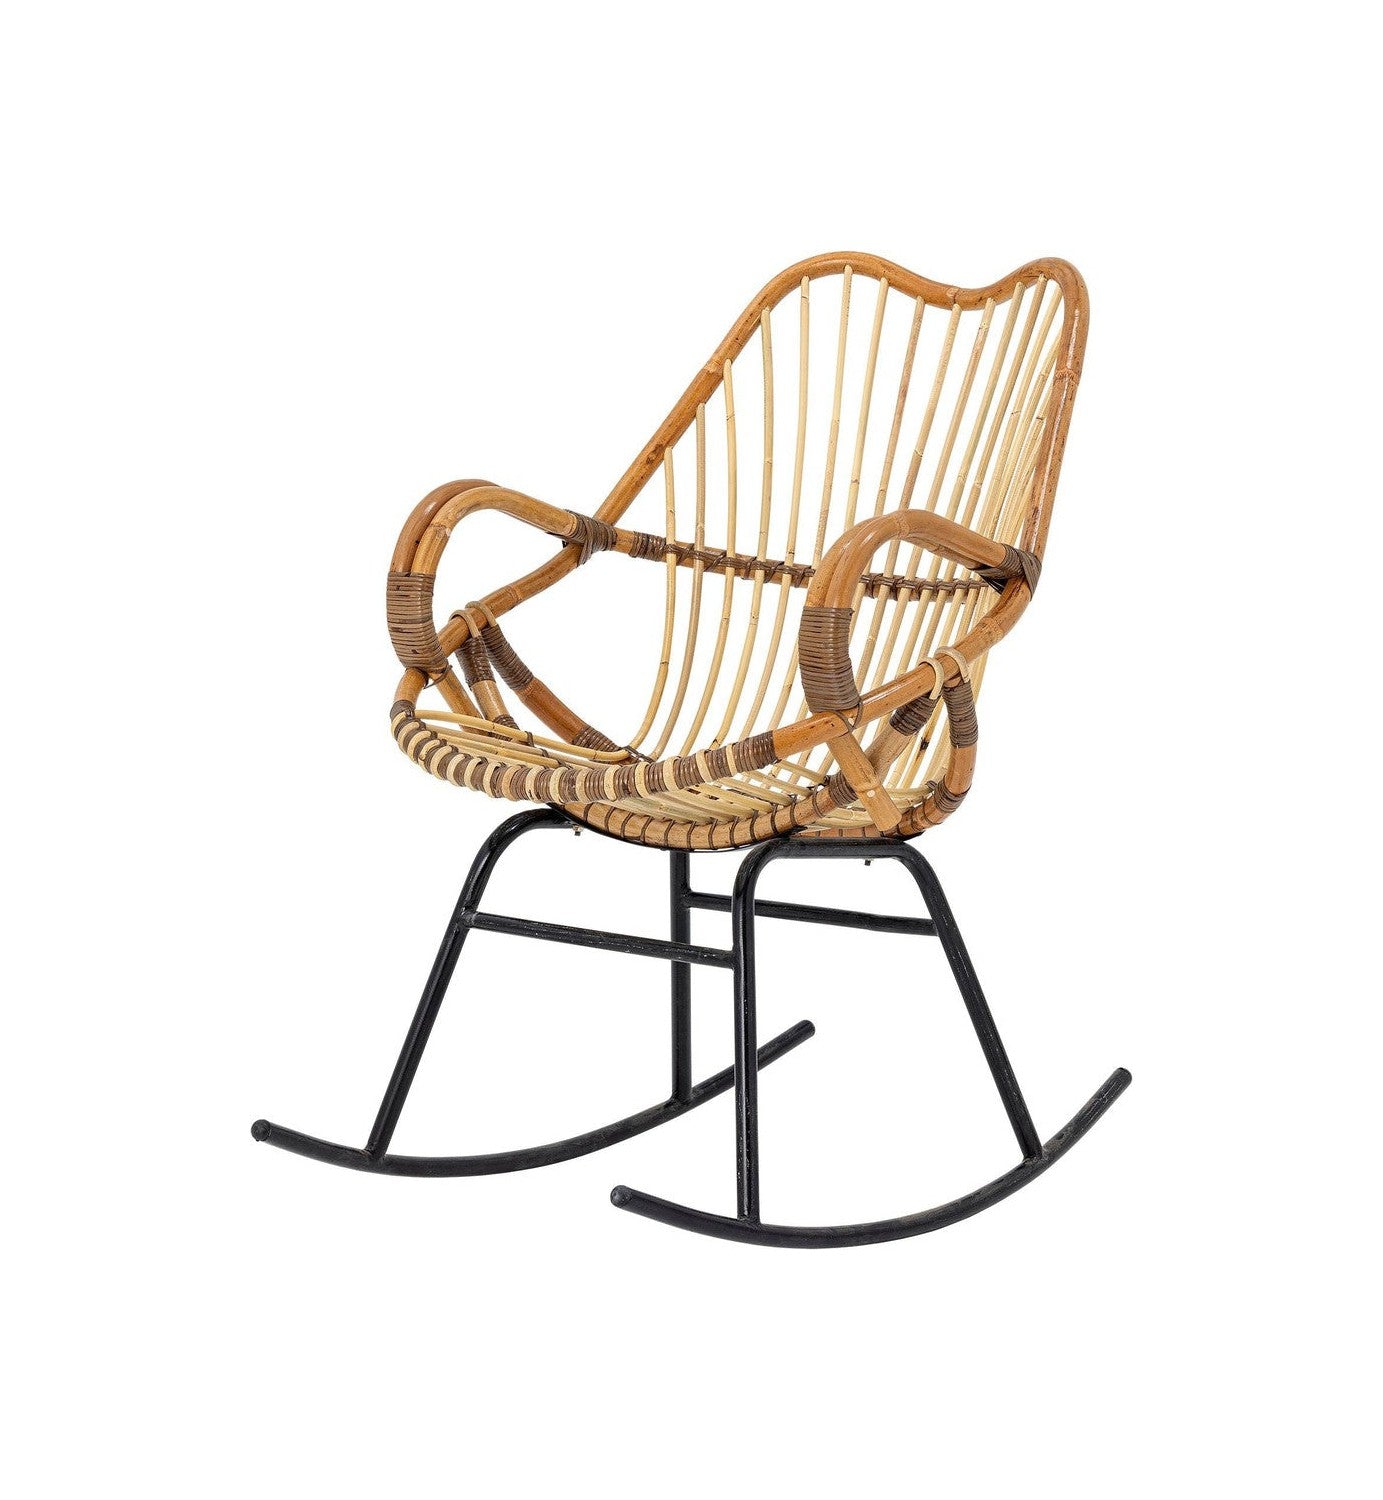 Bloomingville Reine Rocking Chair, Nature, Rattan